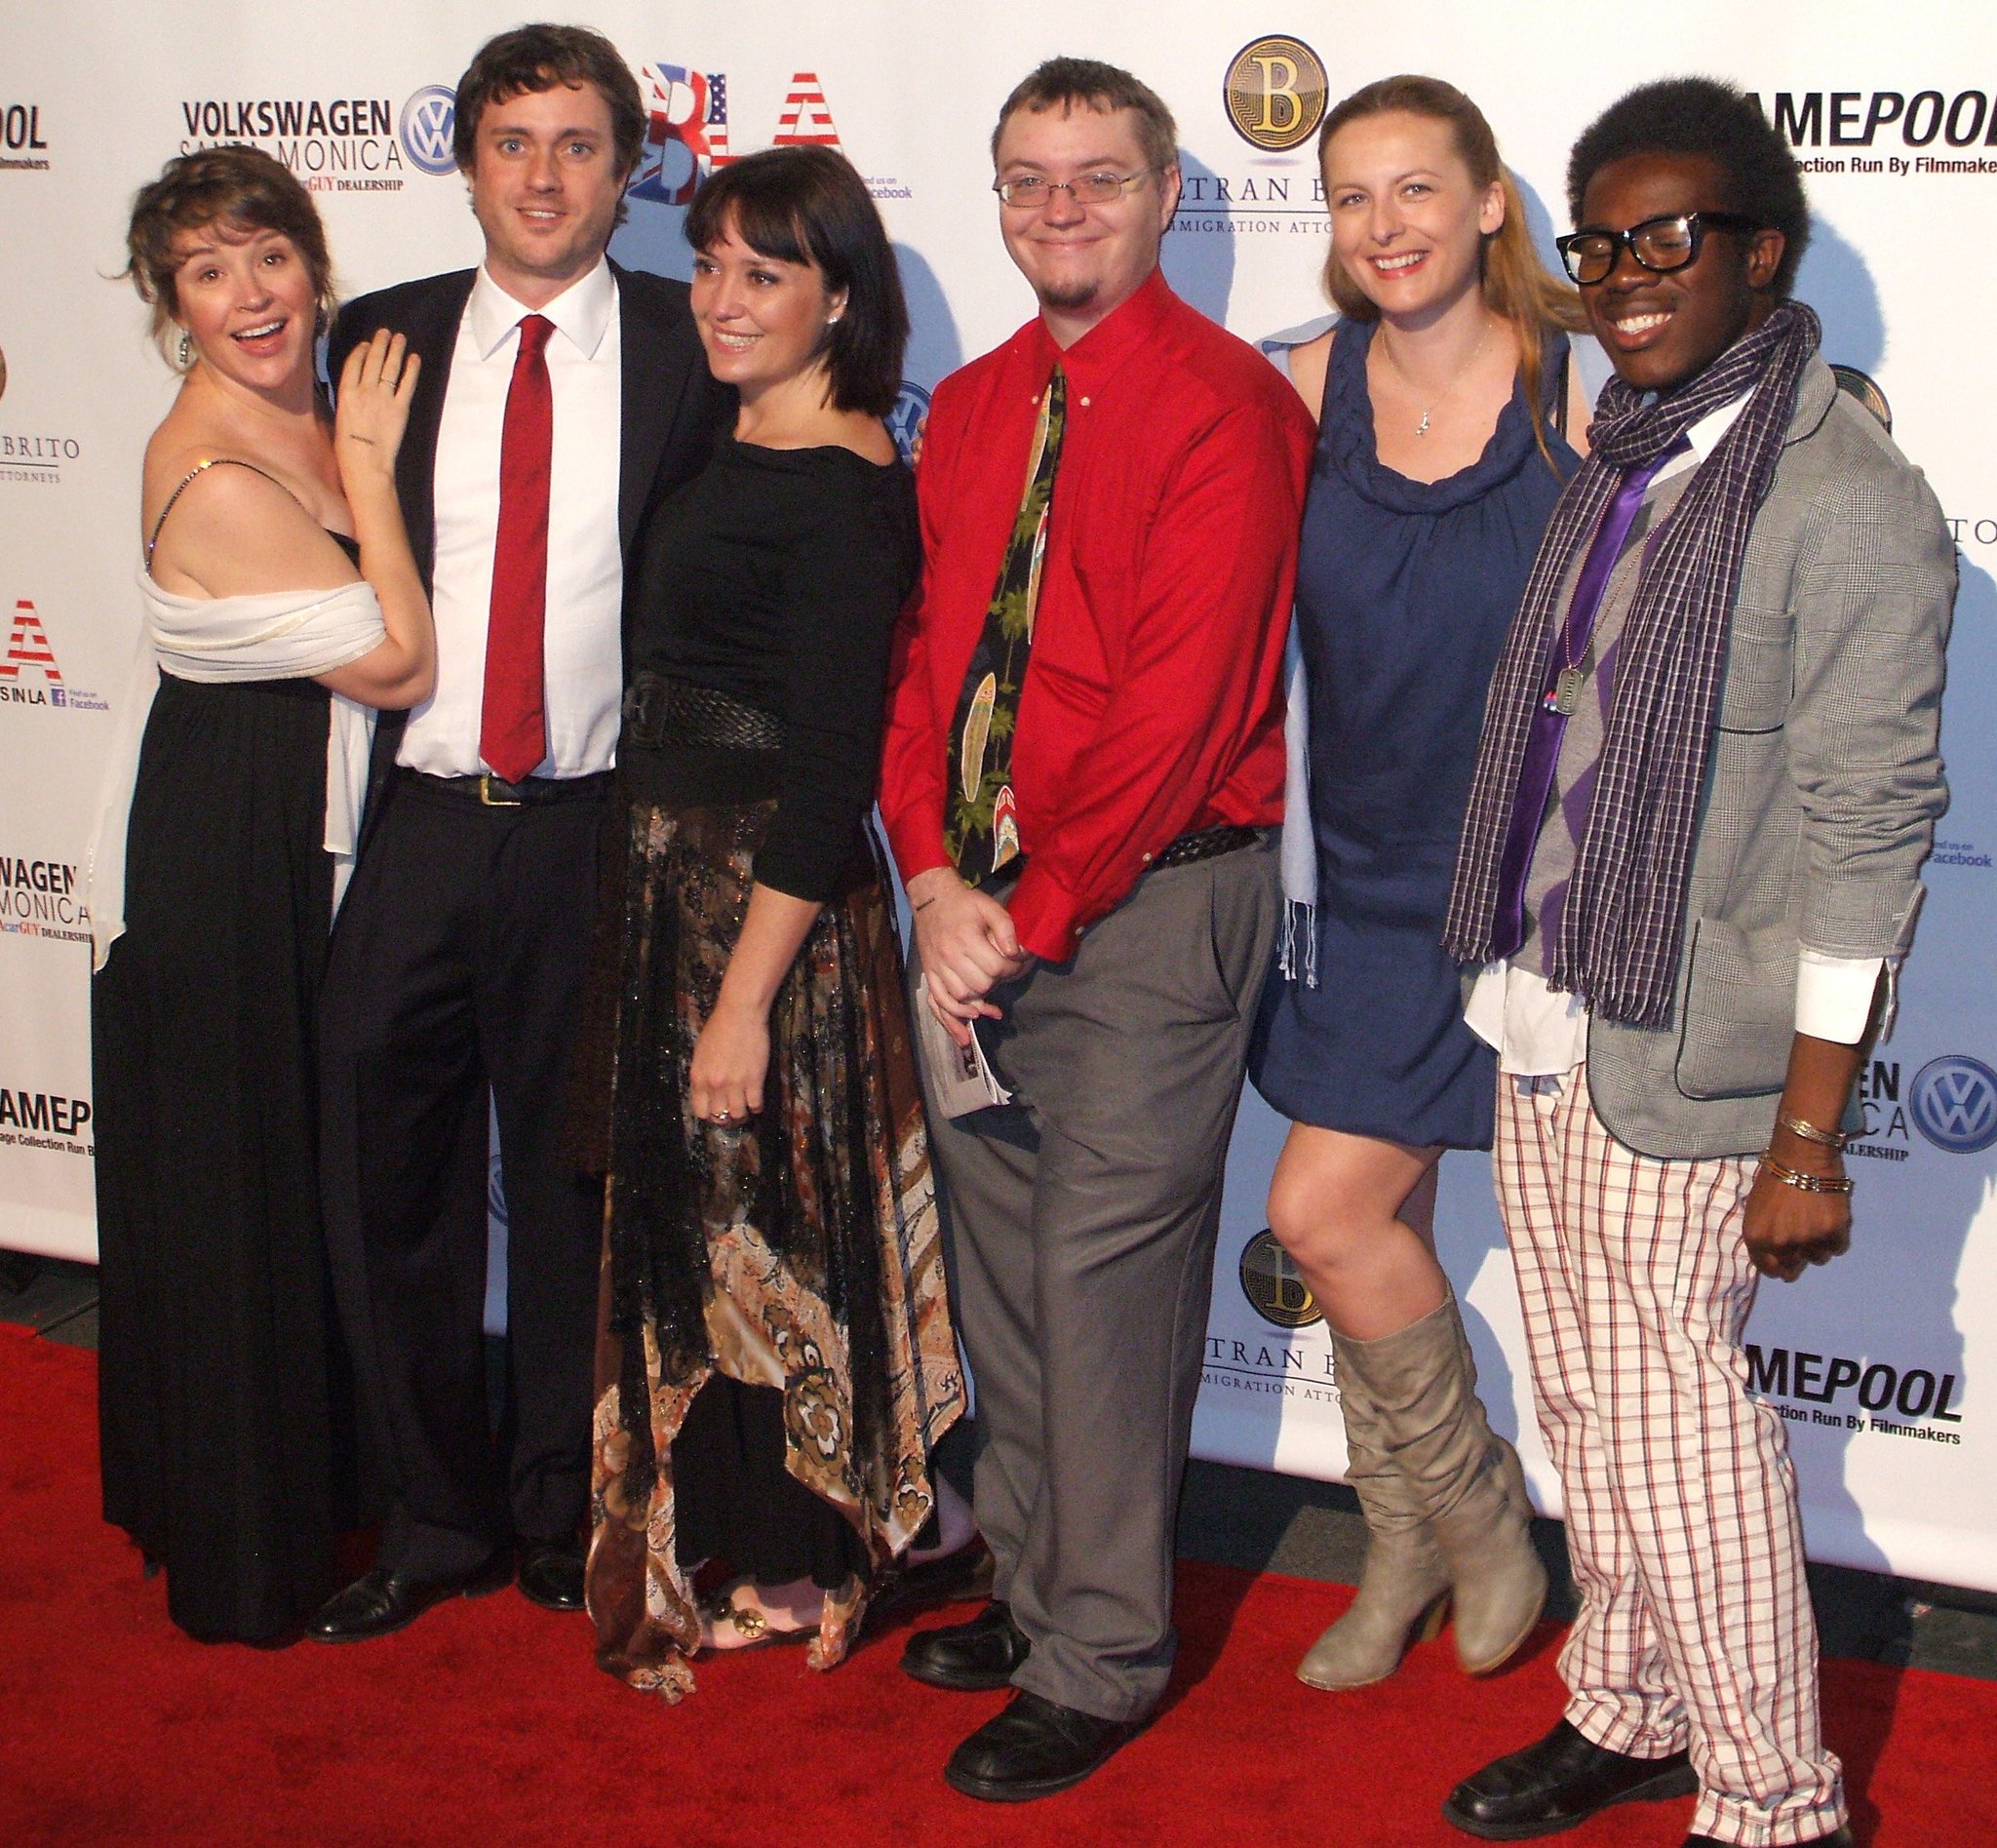 Red carpet for the 2011 Toscars short film fest.